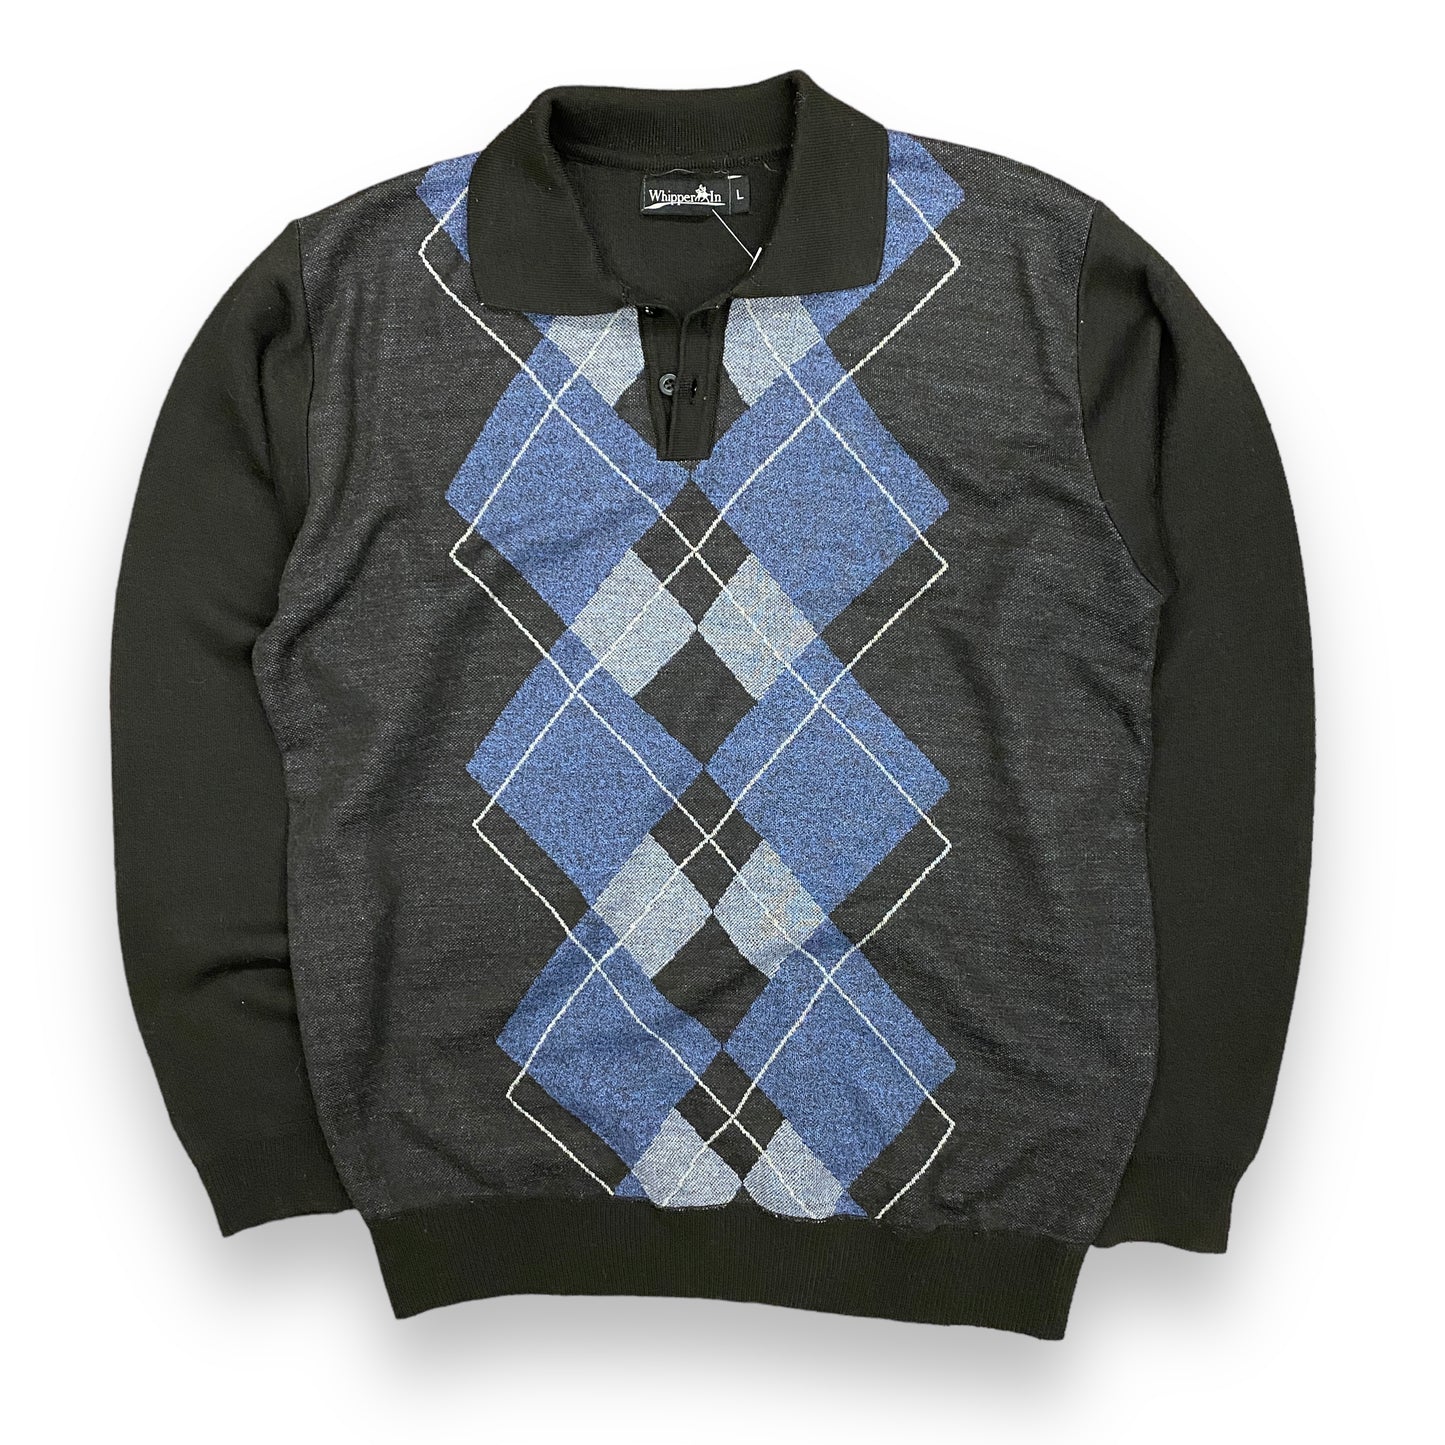 Vintage Black & Blue Argyle Collared Sweater - Size Large